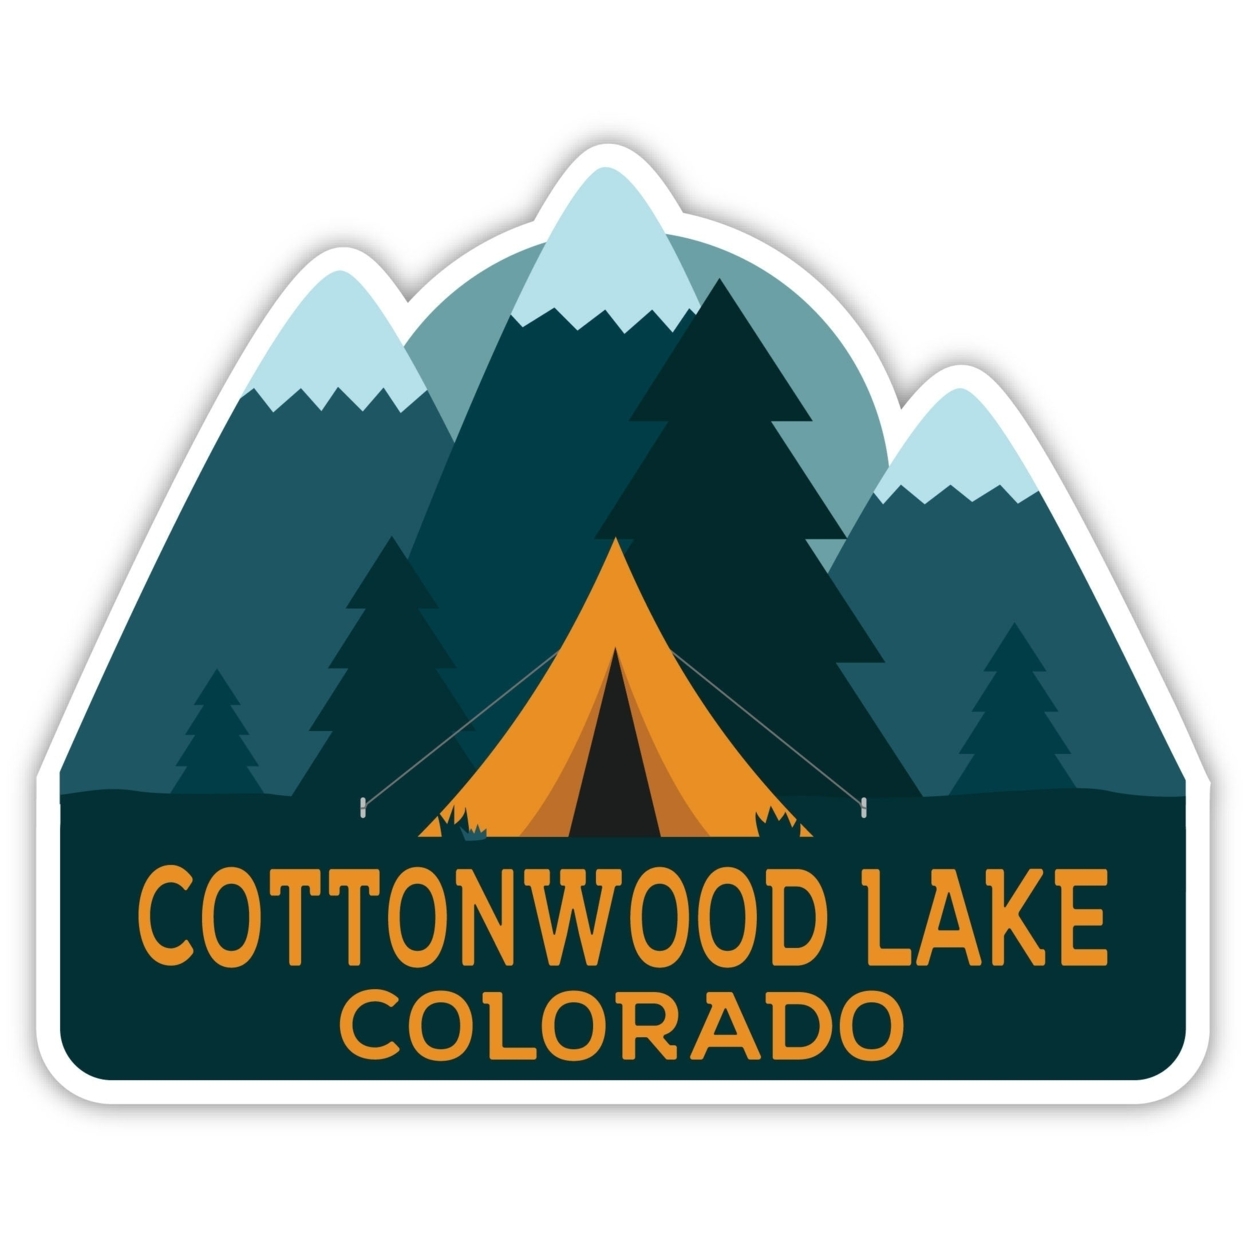 Cottonwood Lake Colorado Souvenir Decorative Stickers (Choose Theme And Size) - Single Unit, 6-Inch, Tent